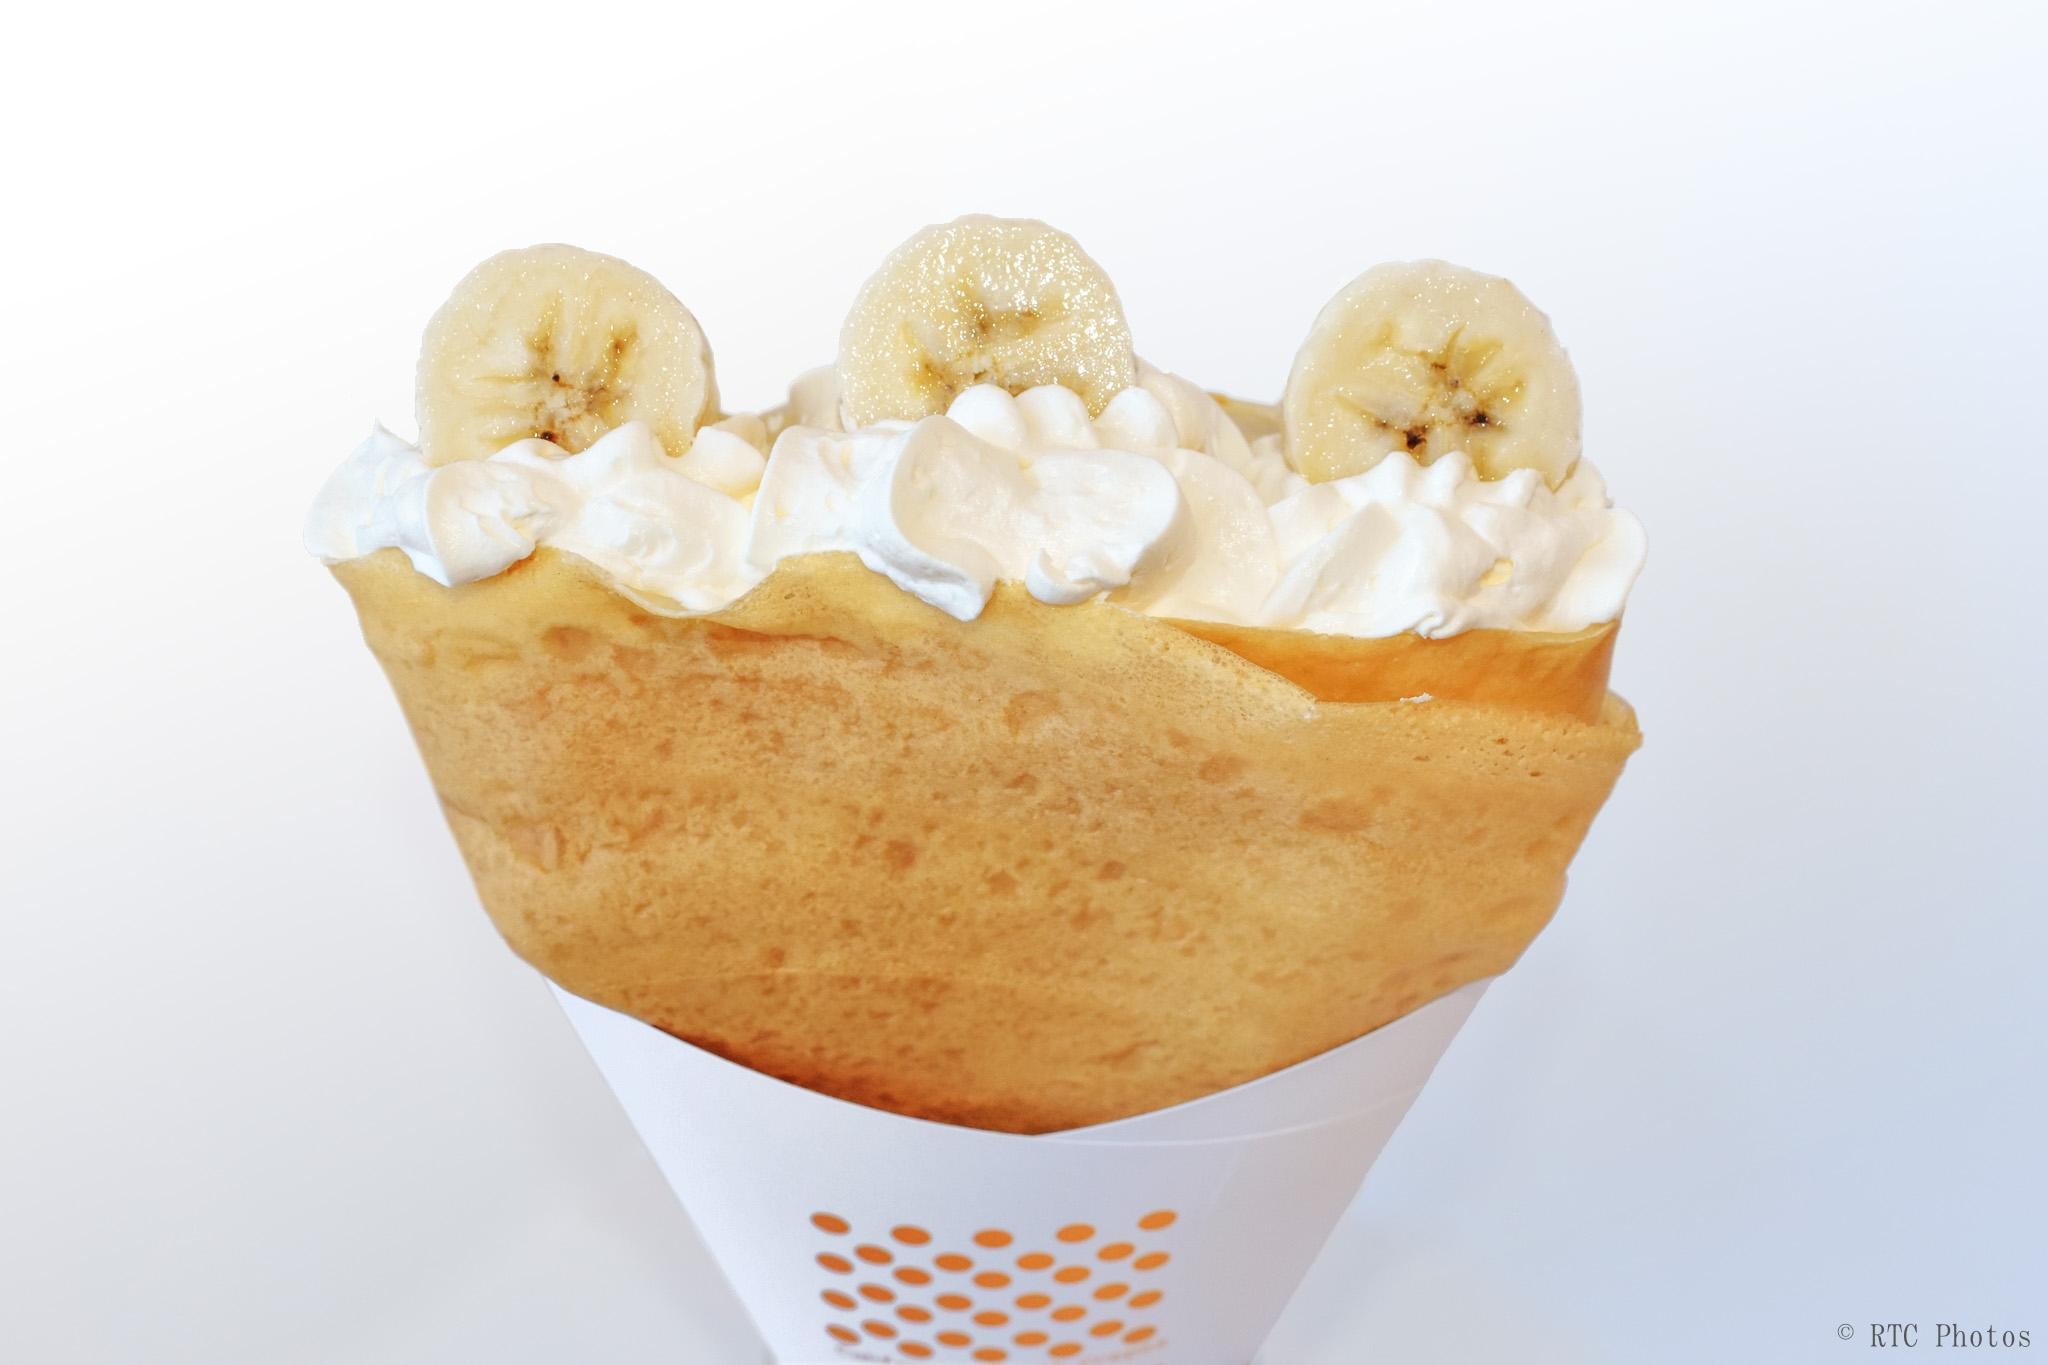 9. Banana & Whipped cream